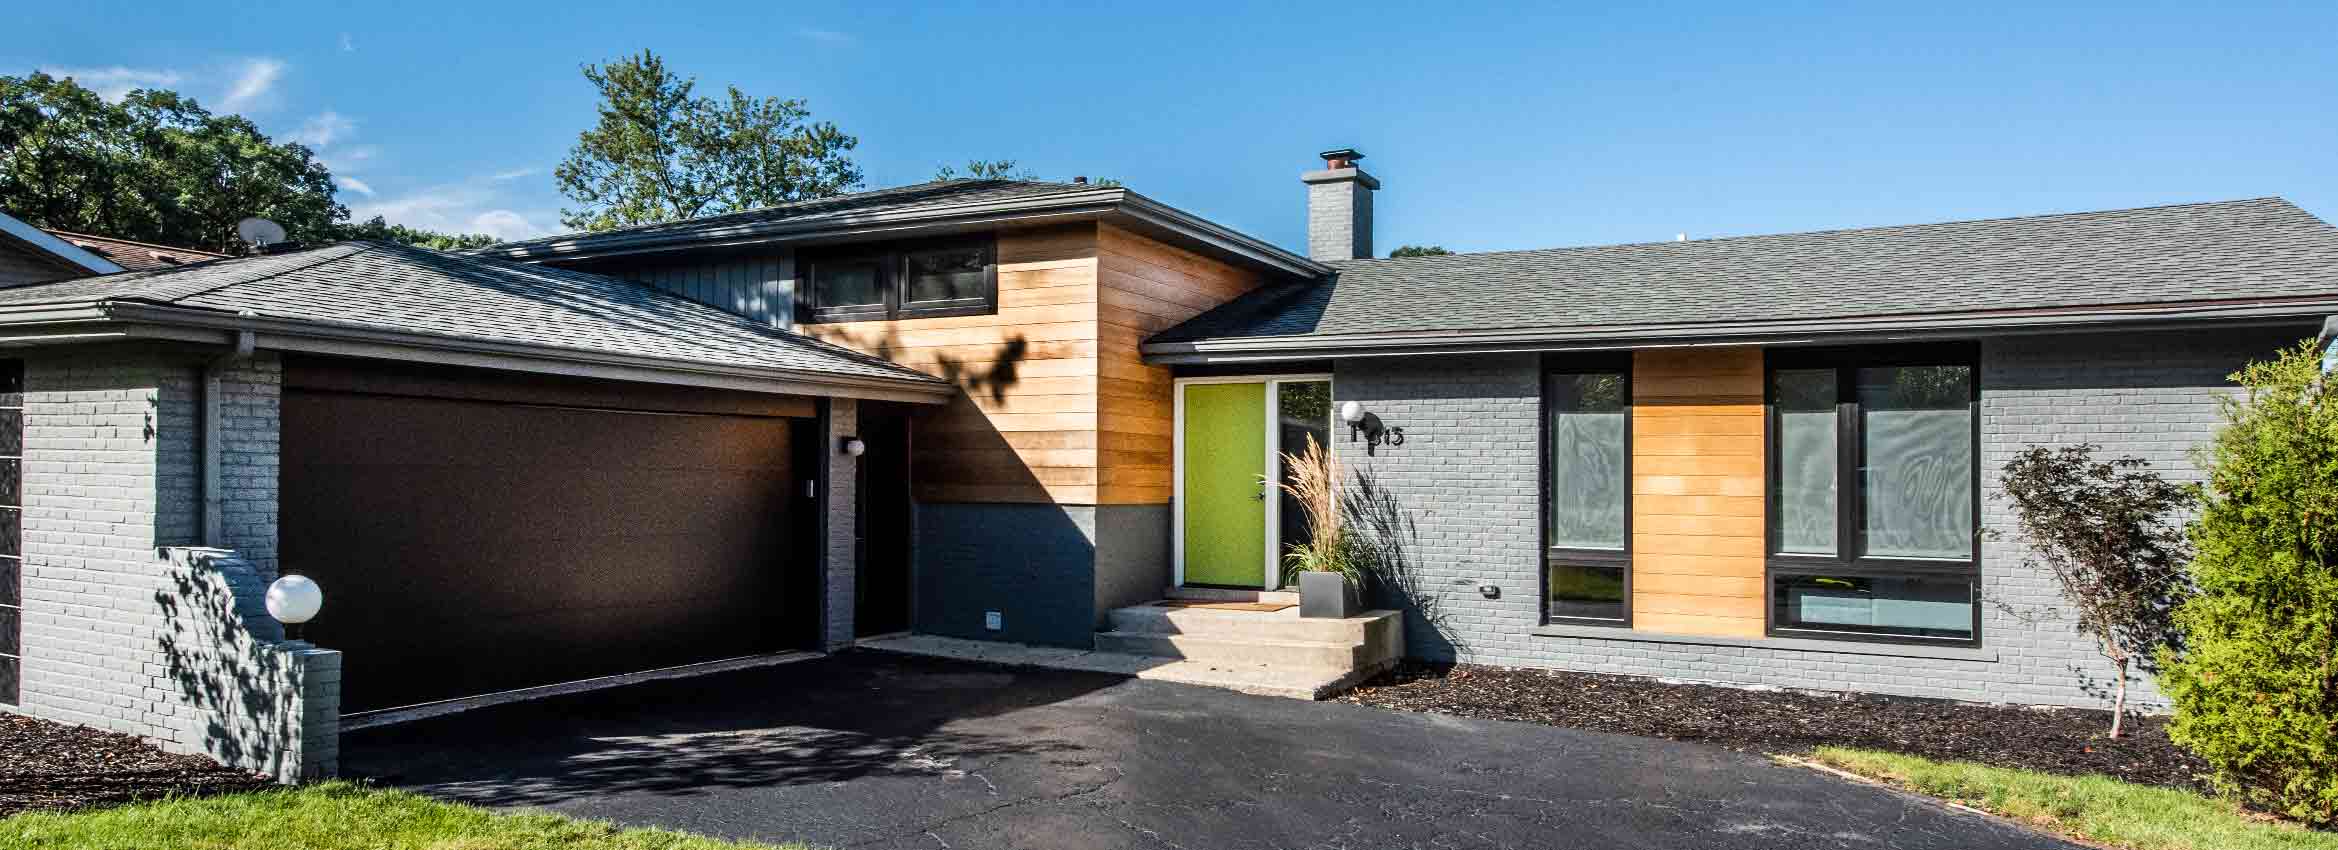 exterior mid century modern split level remodel with cedar siding and grey brick